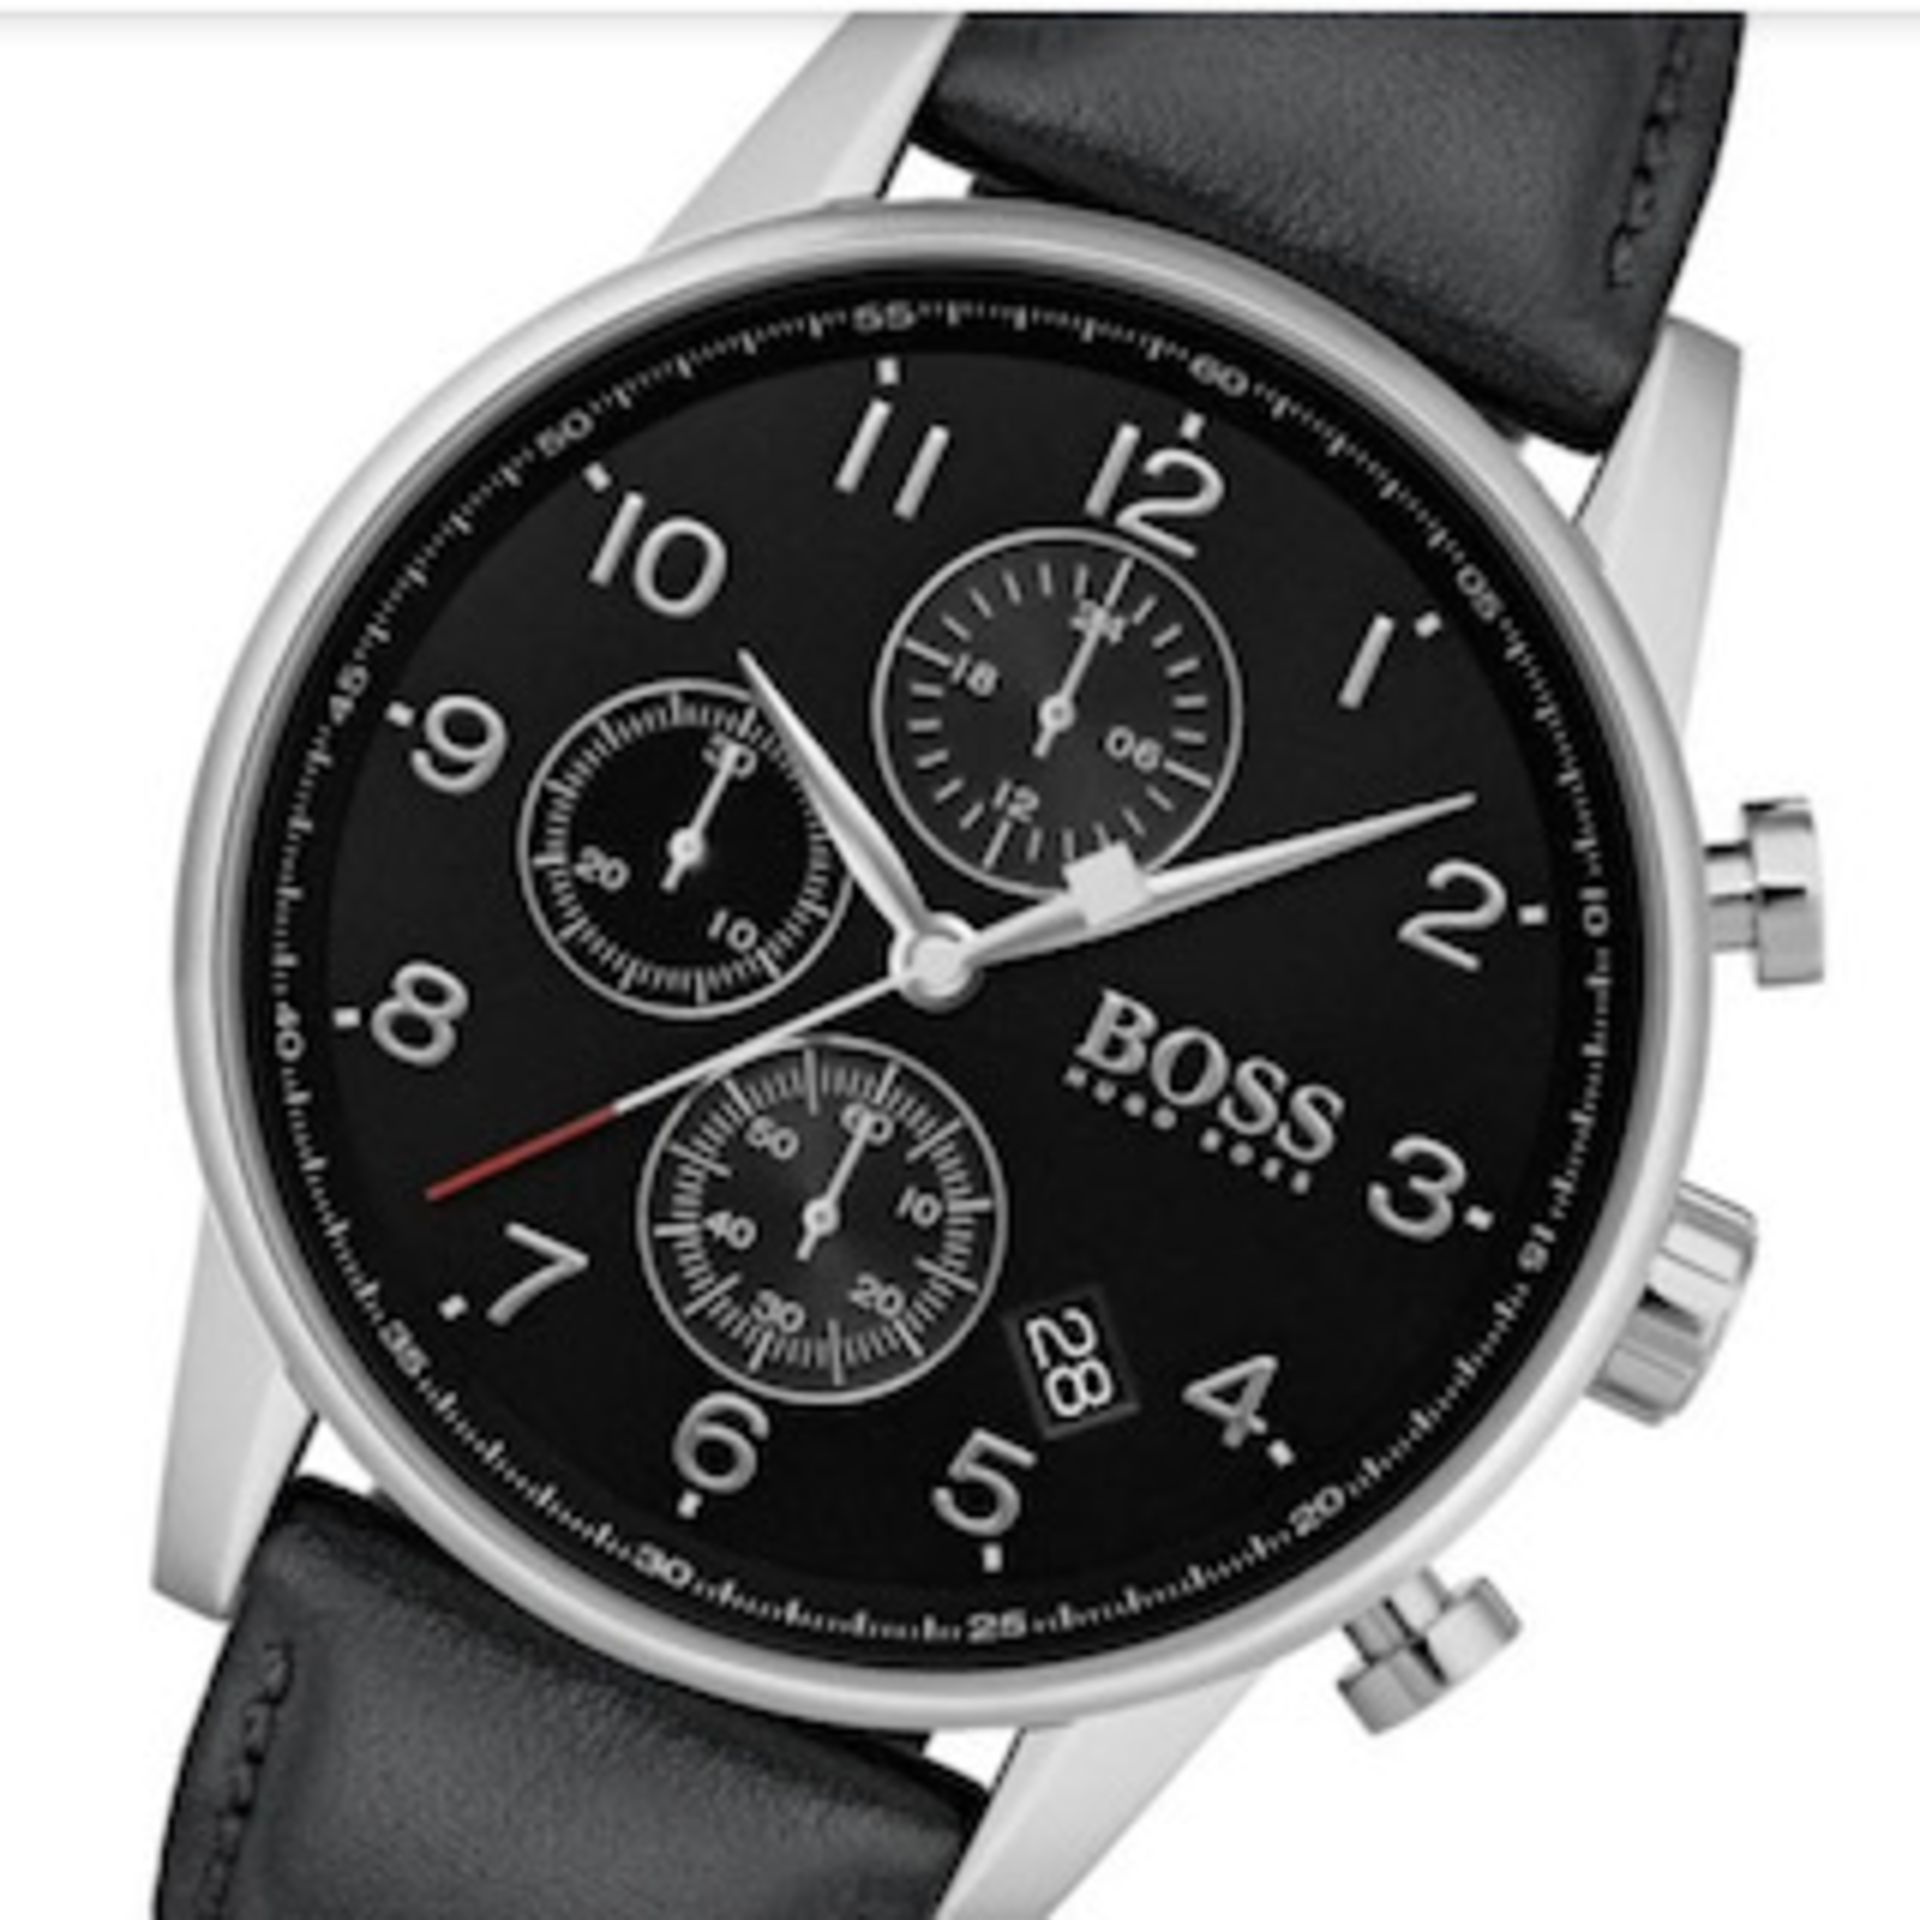 Hugo Boss 1513678 Men's Navigator Black Leather Strap Chronograph Watch - Image 5 of 6